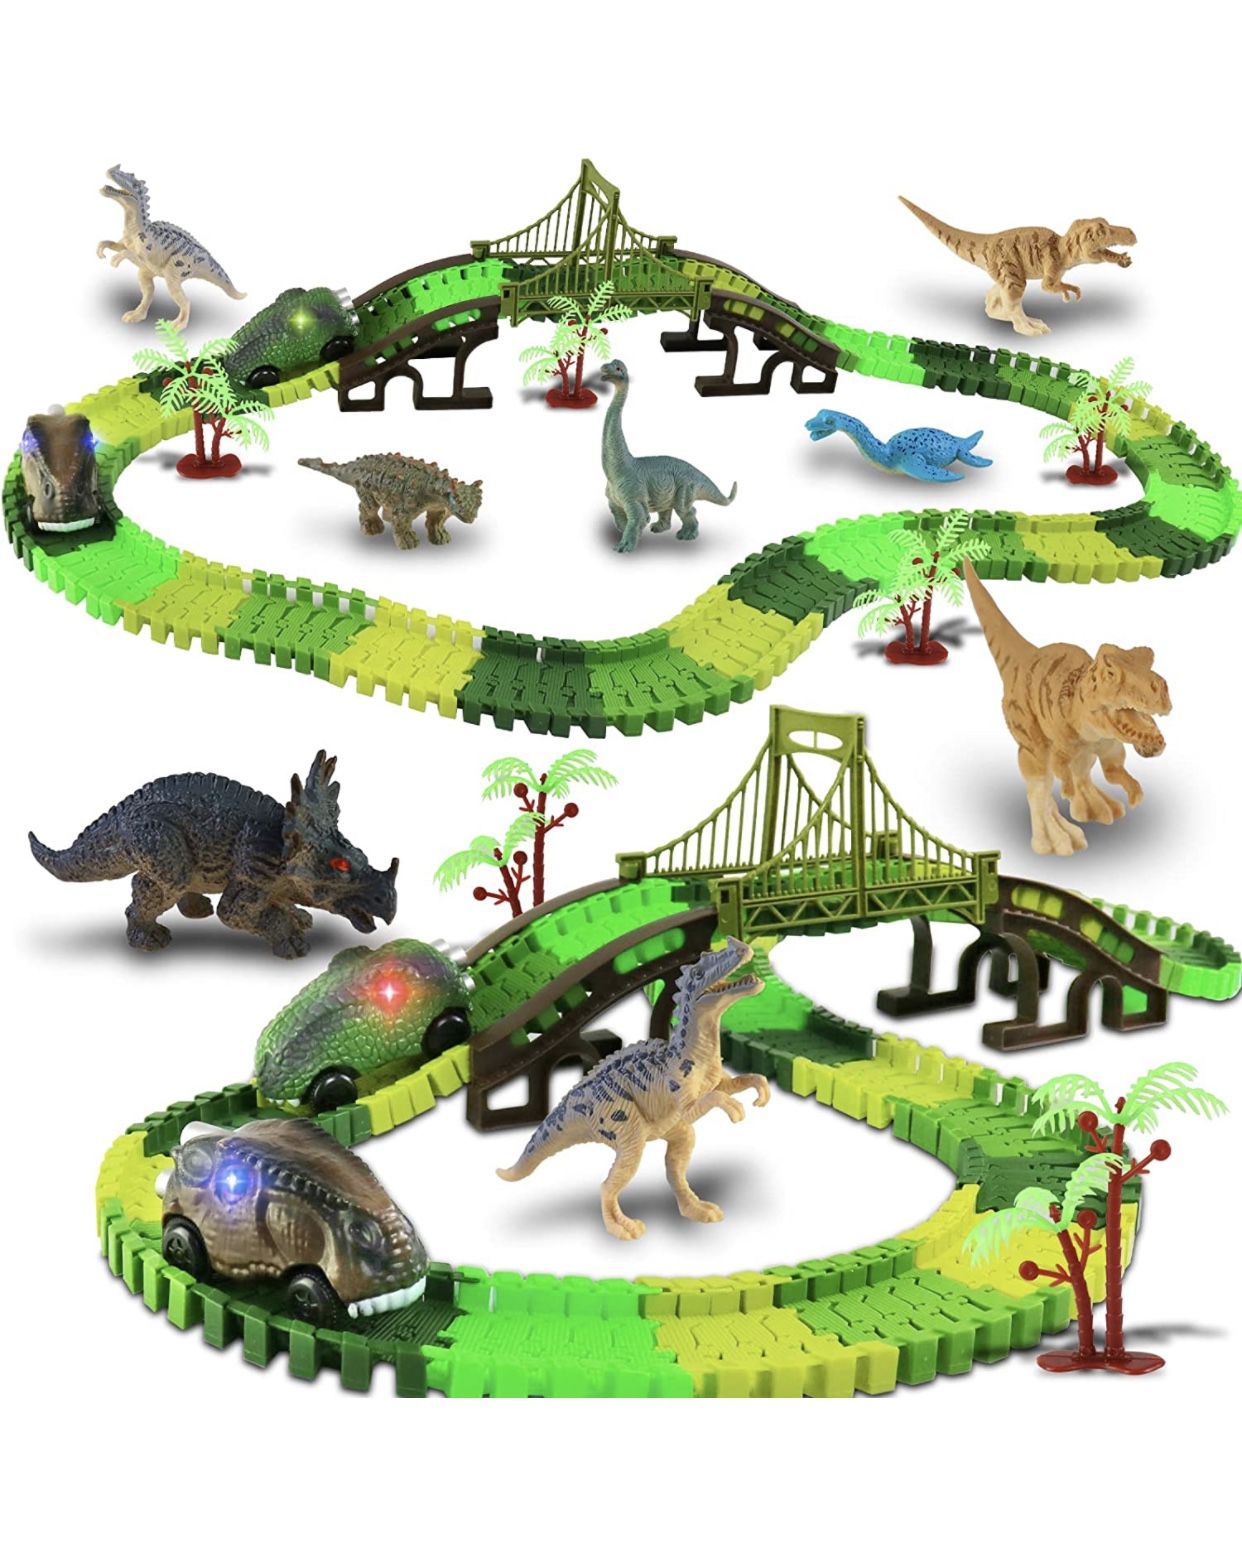 AvoKlan Dinosaur Toys for Kids, 163 Pieces Flexible Dinosaur Track Playset with 6 Dinosaurs and 2 LED Dinosaur Cars, Dino Race Tracks for 3 4 5 6 7 8 